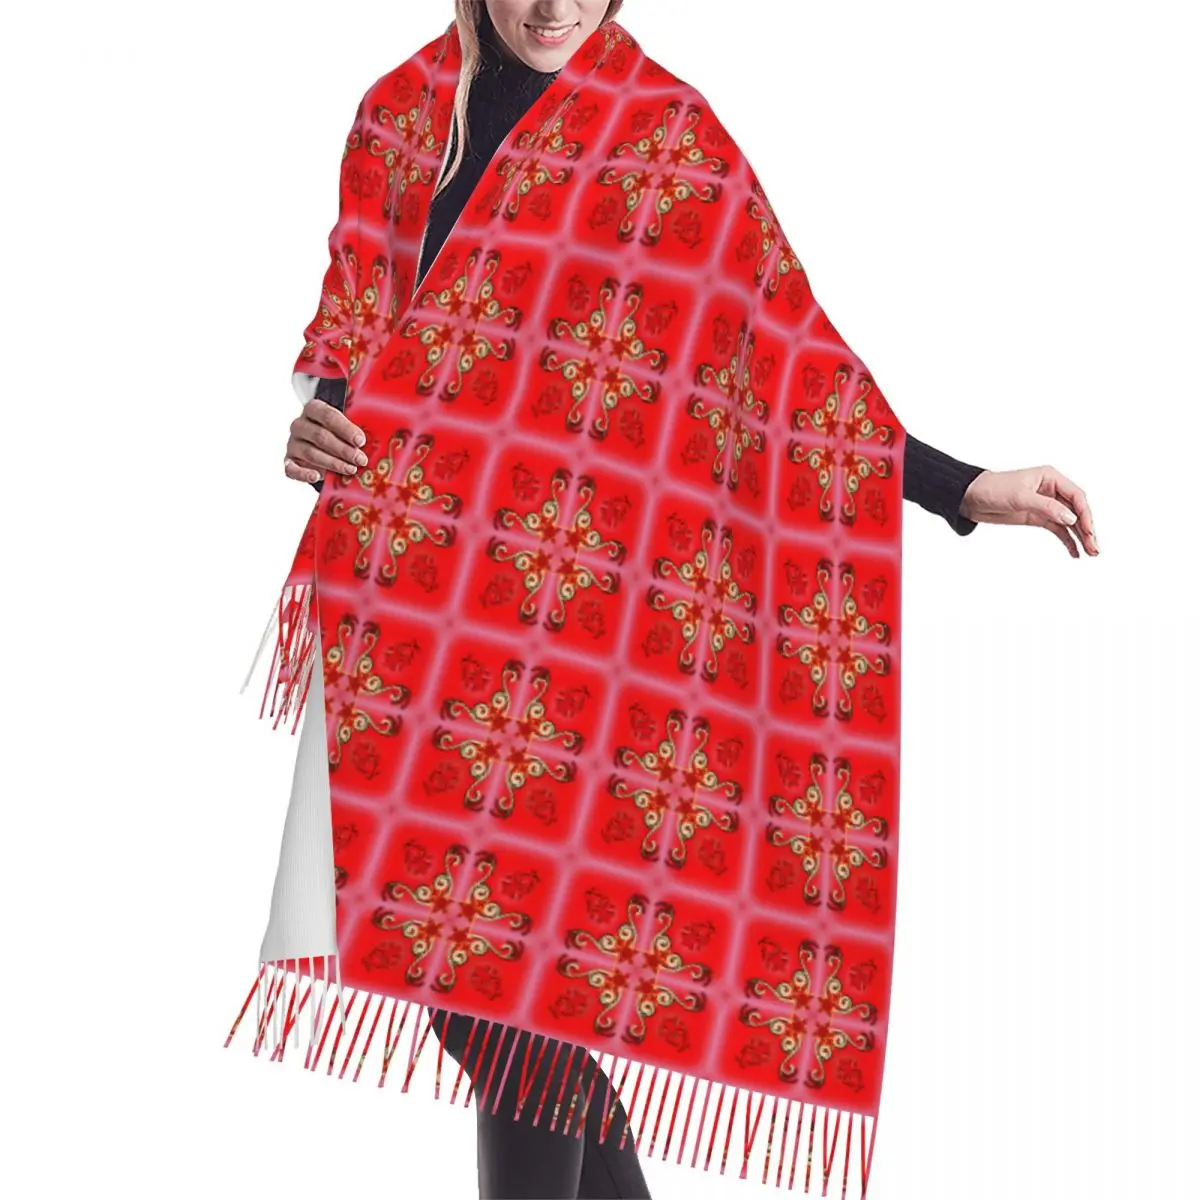 

Printed Multicolor Pattern In The Arabian Style Scarf Men Women Winter Fall Warm Fashion Luxury Versatile Scarves Shawls Wraps